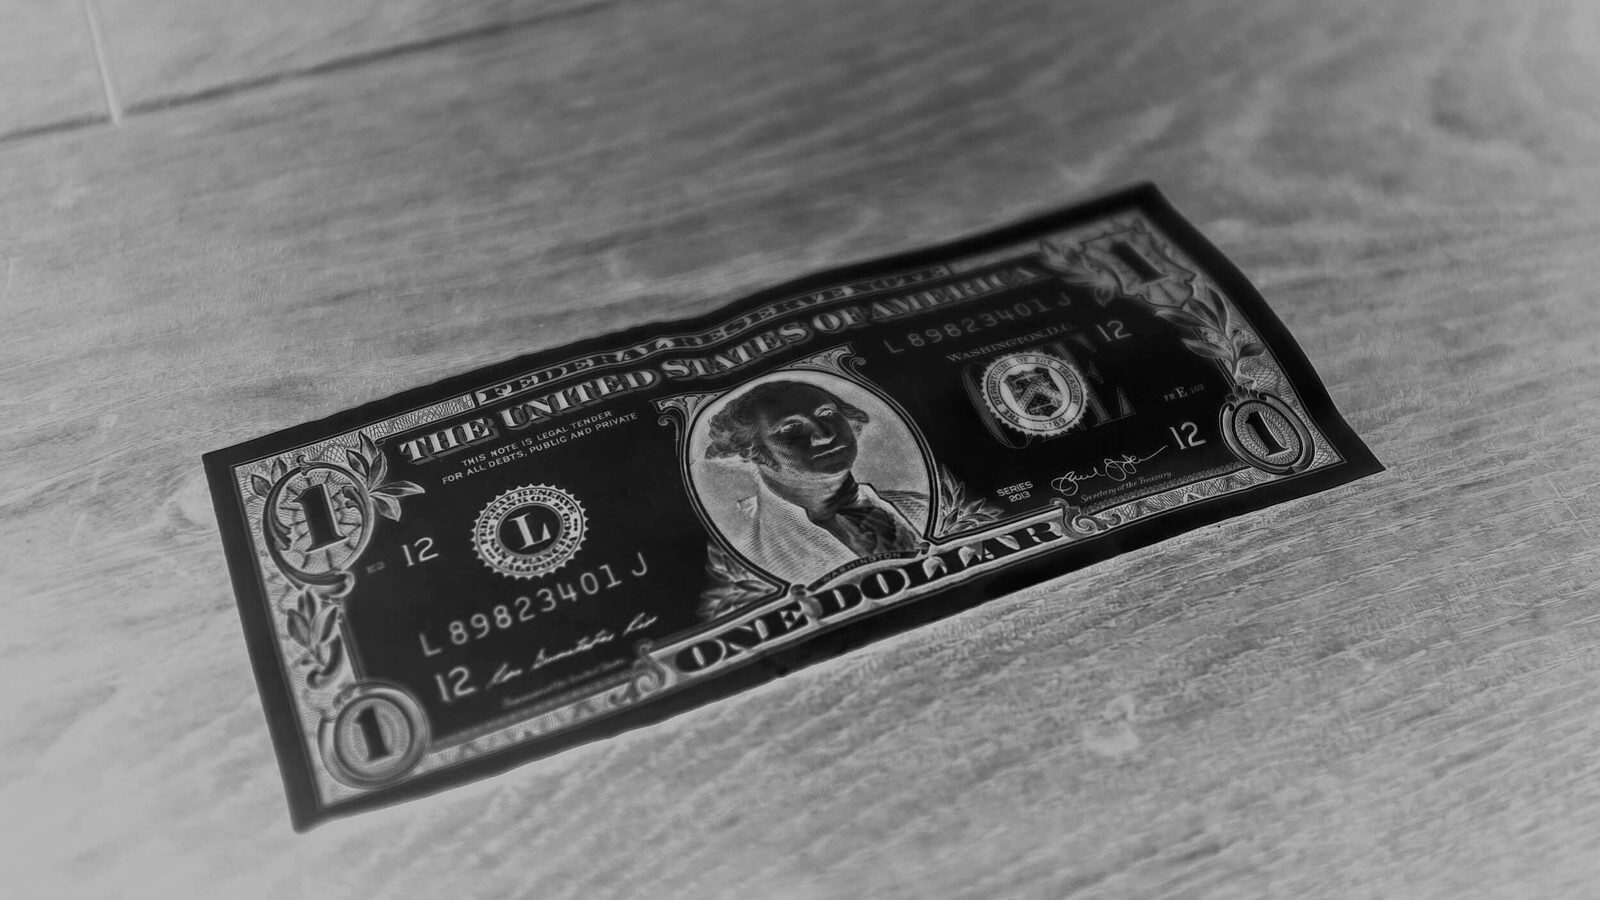 a dollar bill in an imaging machine